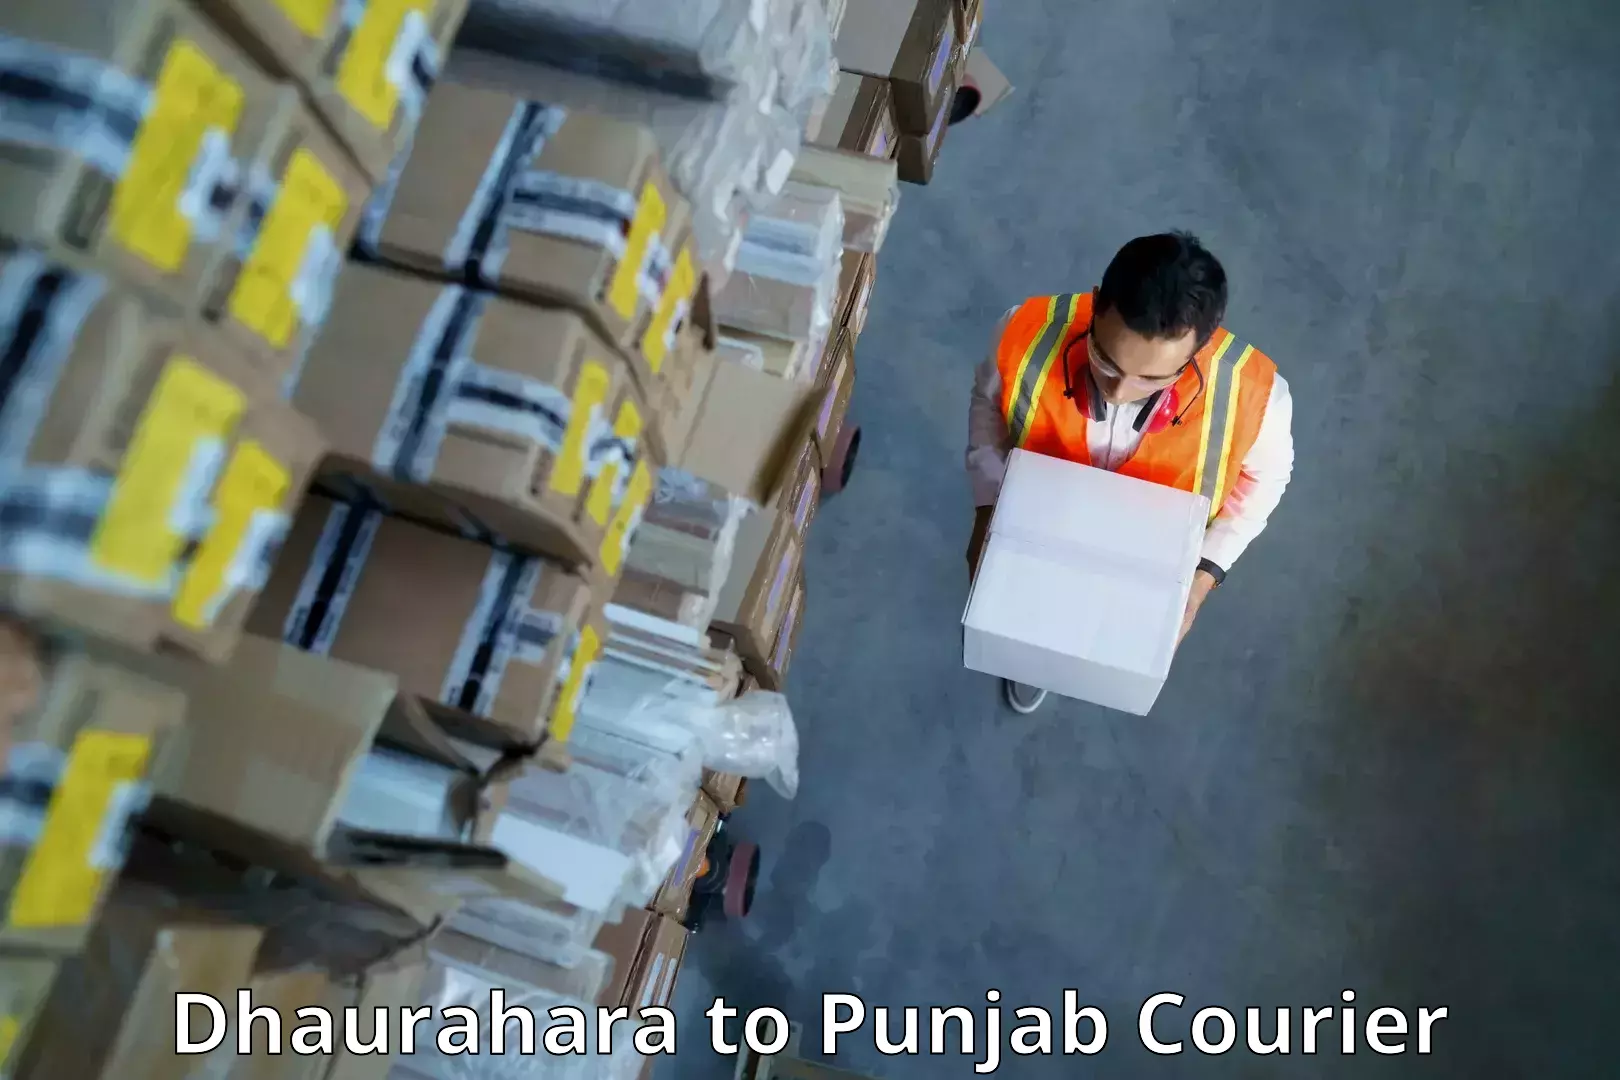 Urgent courier needs Dhaurahara to Amritsar